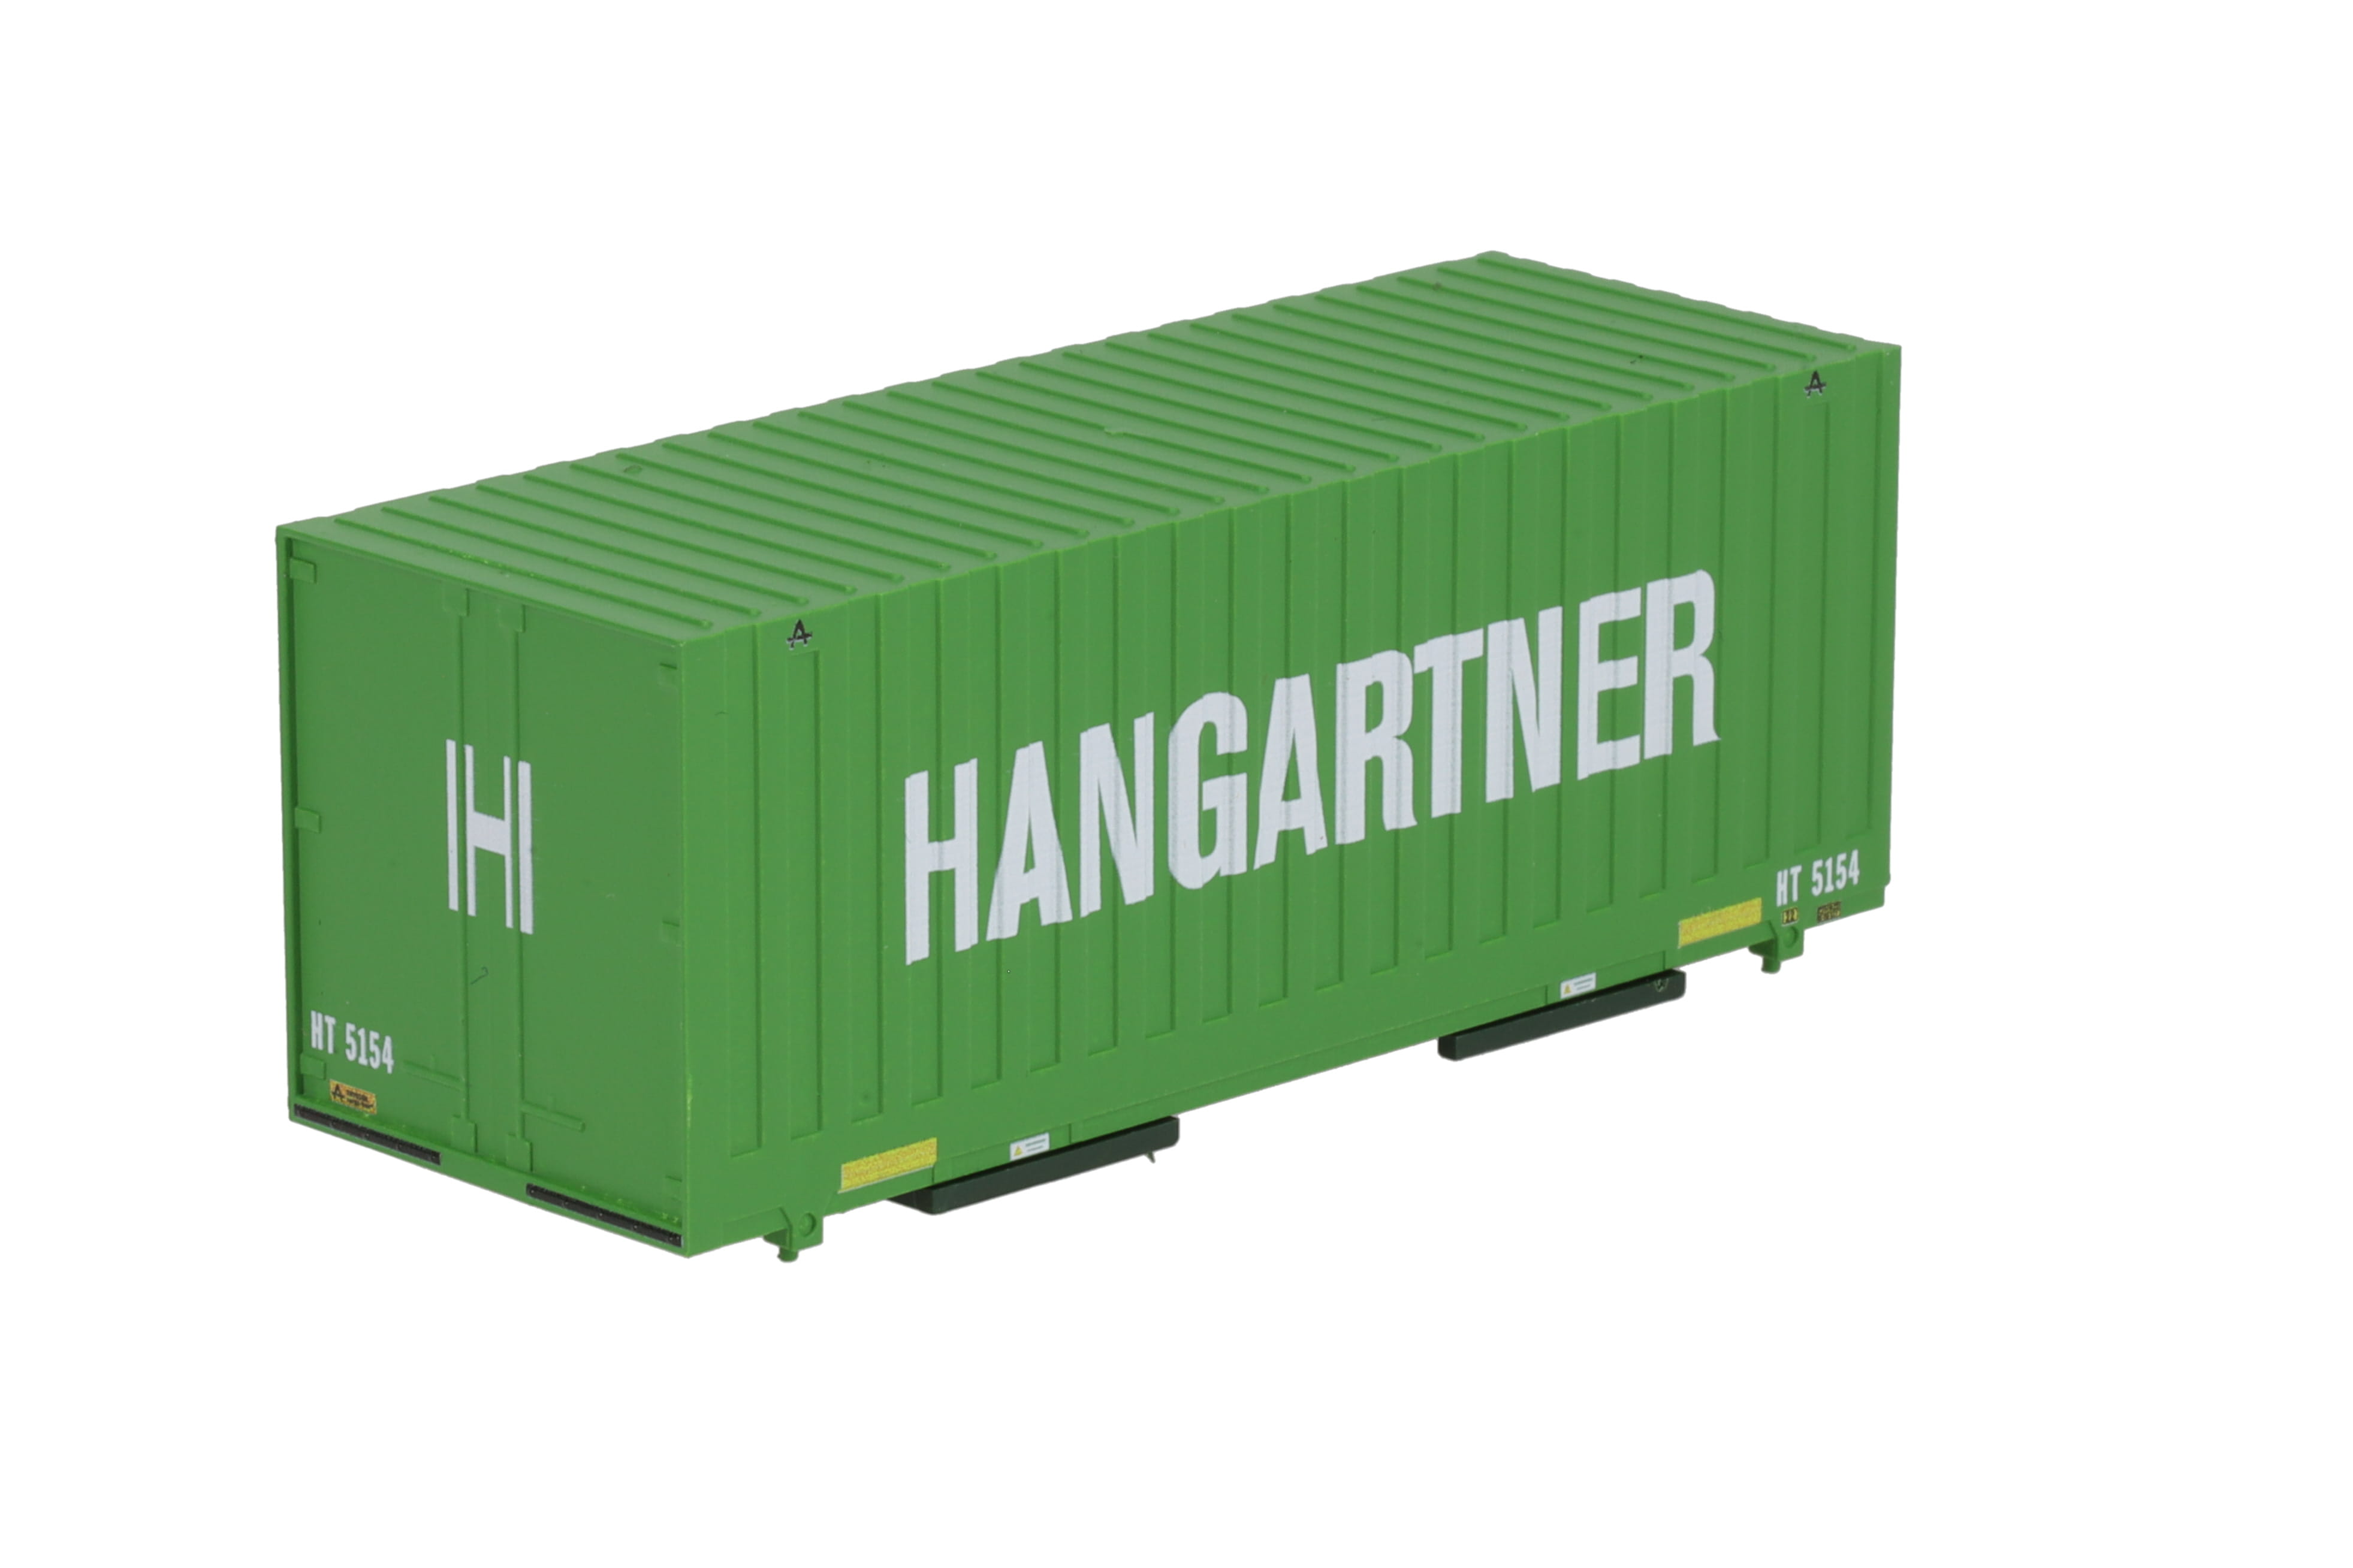 1:87 Container WB-C715 HANGAR Wechselbehälter WB-C 715 Thyssen Cargo-Box, Aufschrift: HANGARTNER, grün, Behälter-Nr: HT 5154